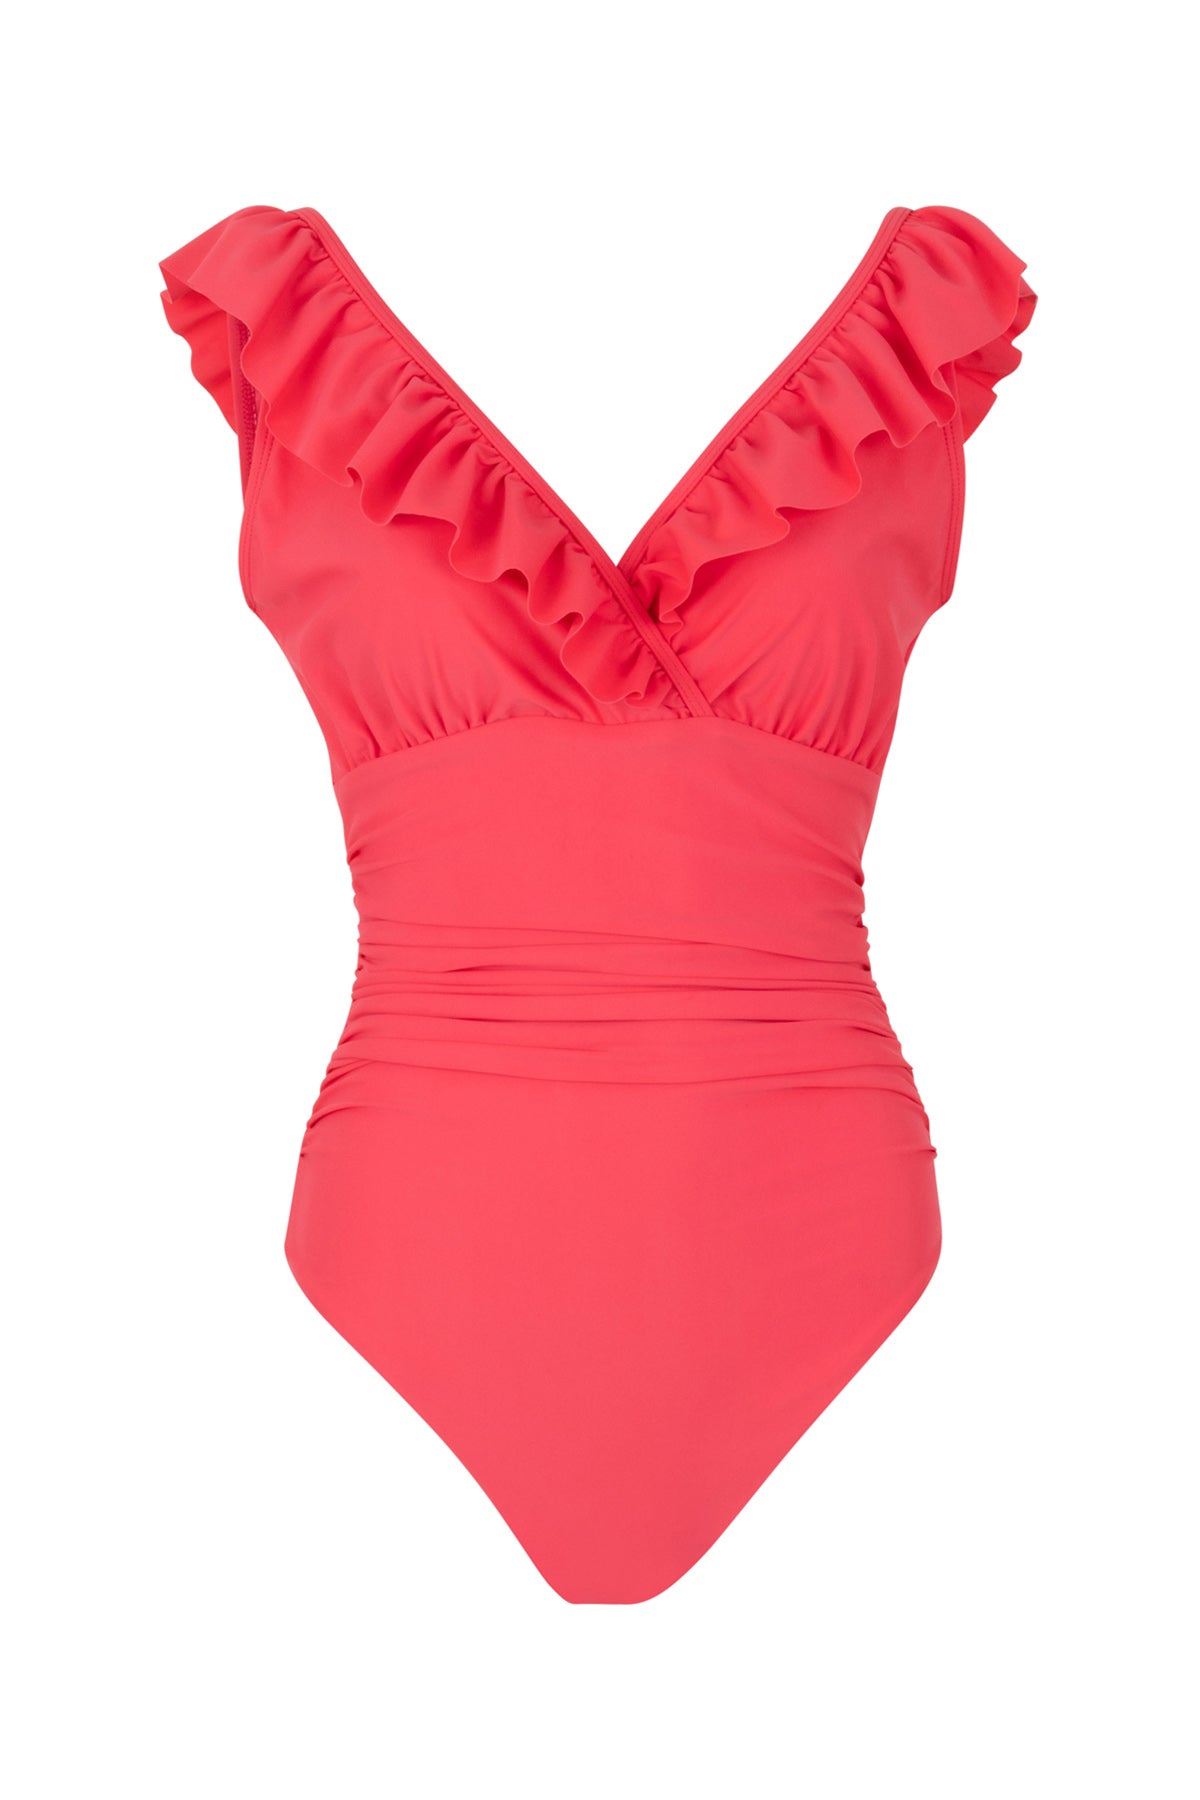 CRAS Agnes Swimsuit Swimwear 4009 Paradise Pink